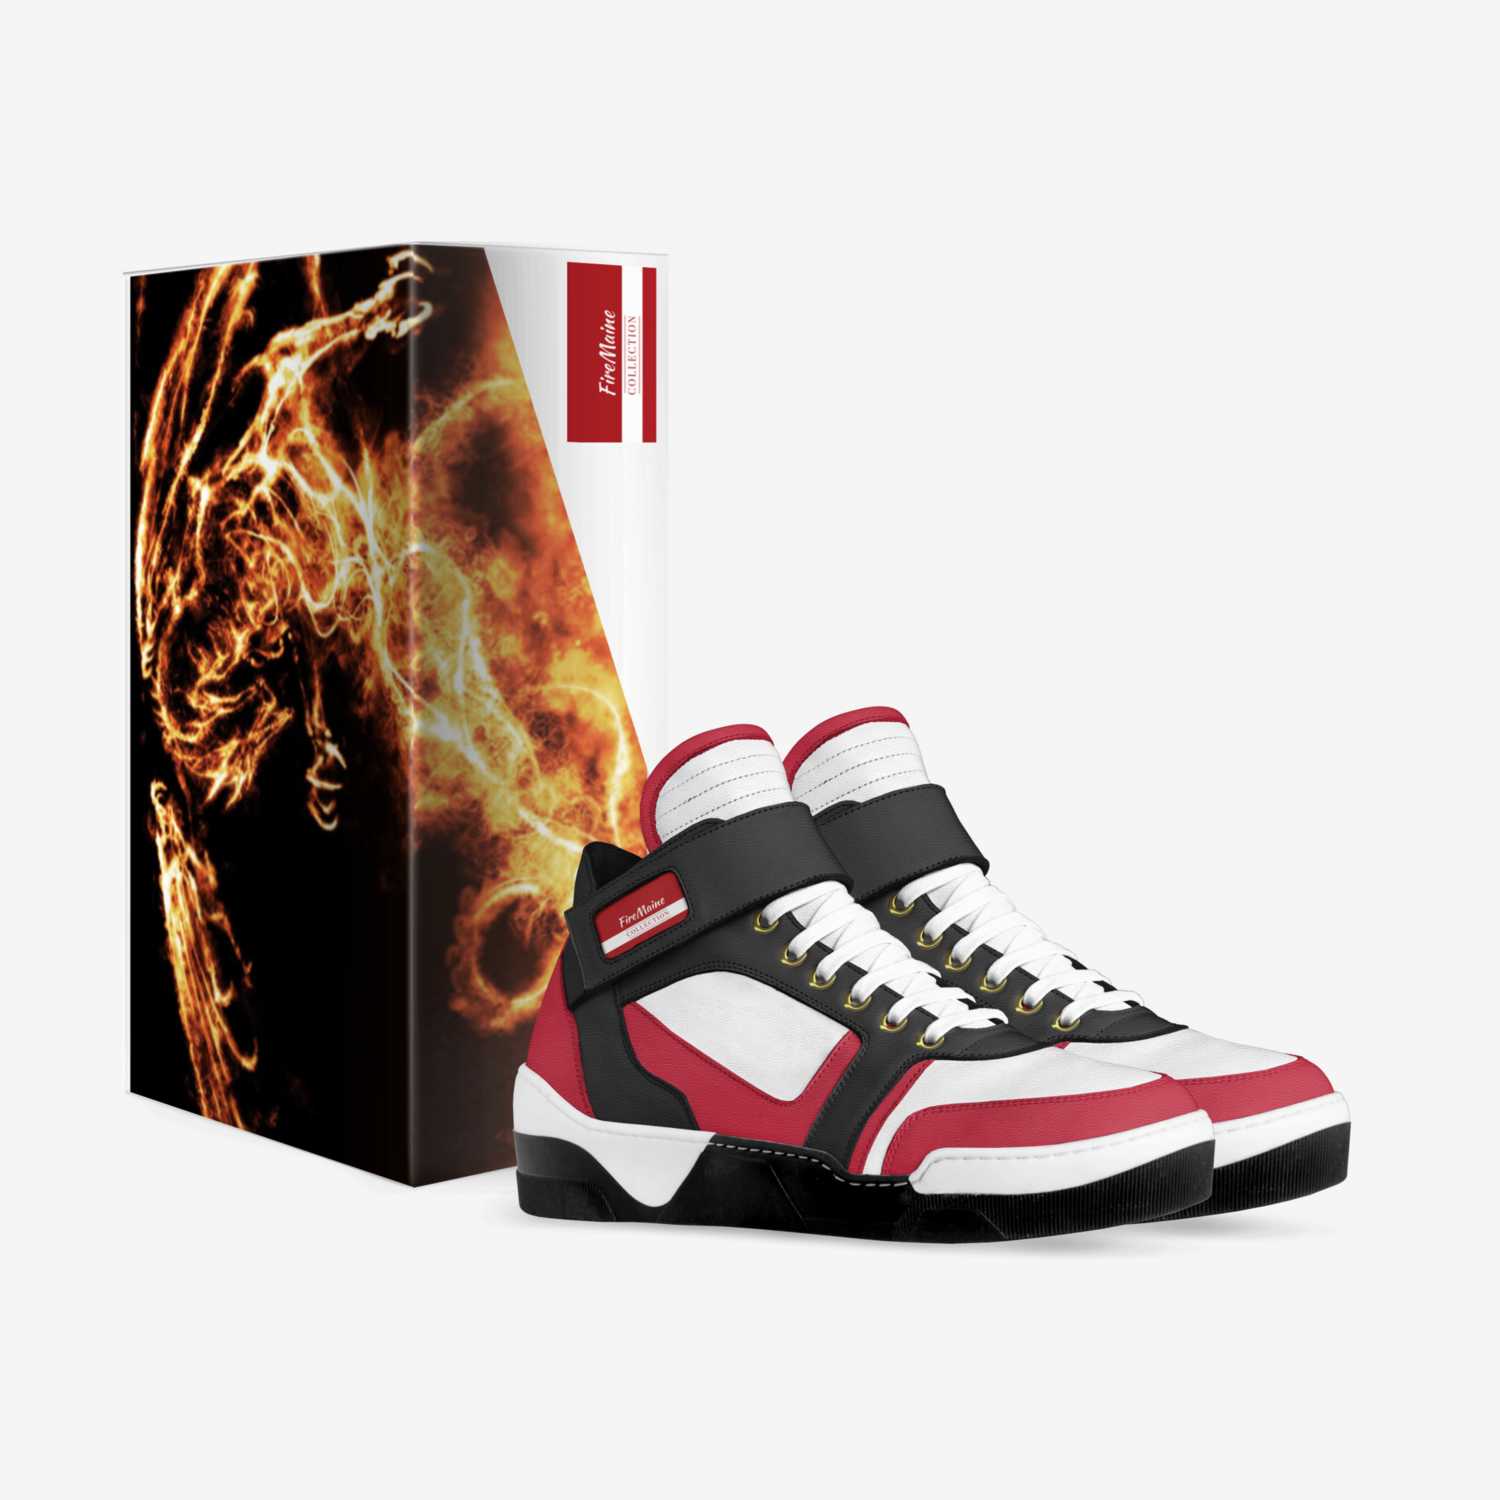 FireMaine custom made in Italy shoes by Noah O’harrow | Box view